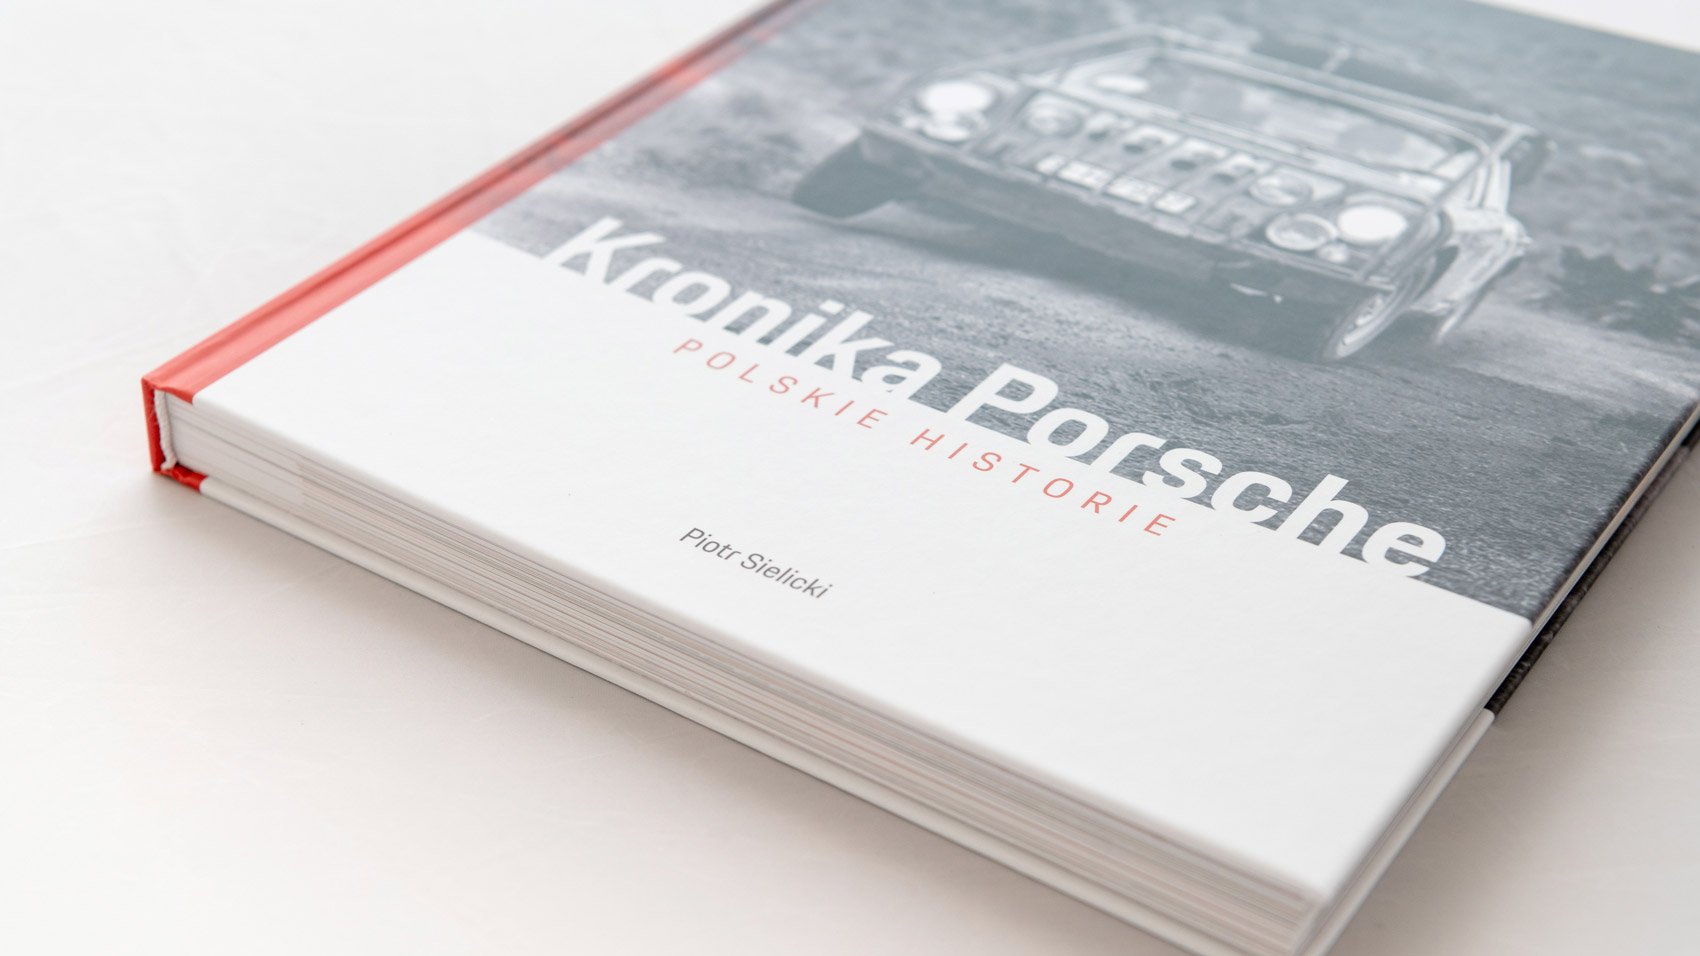 „Kronika Porsche. Polskie historie” zbliżenie na detale